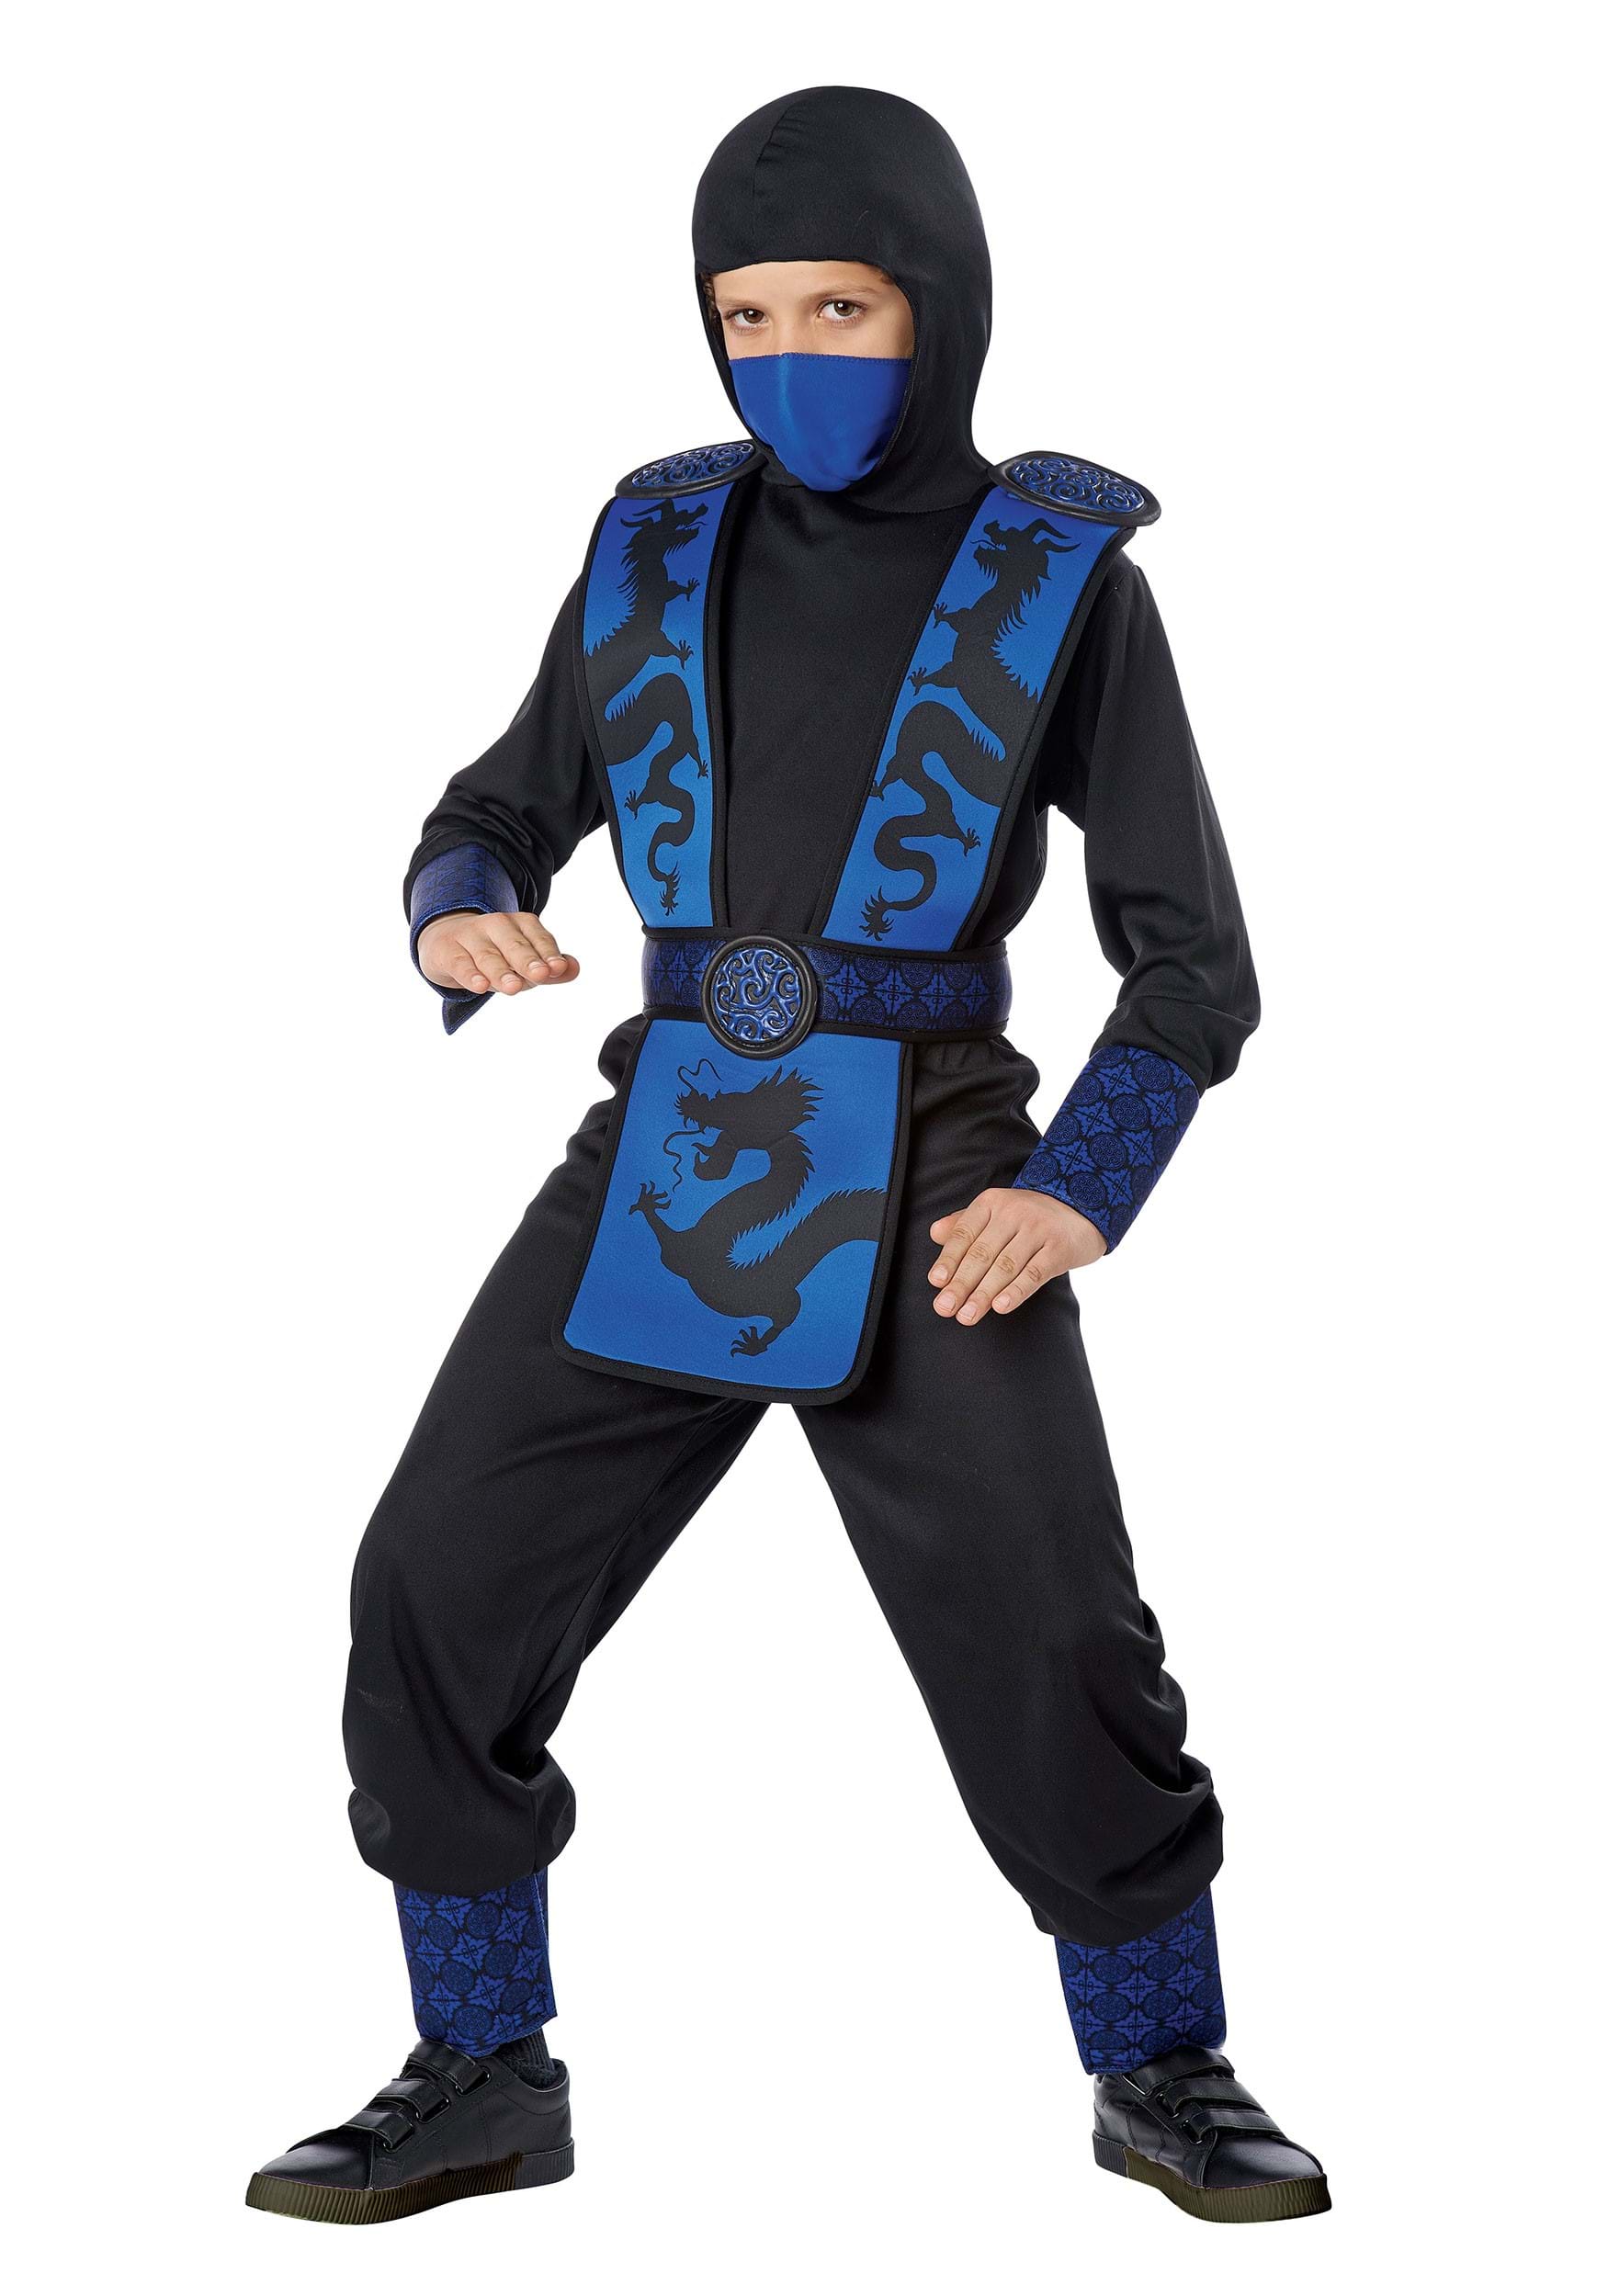 https://images.halloweencostumes.com/products/88111/1-1/boys-regal-blue-ninja-costume.jpg